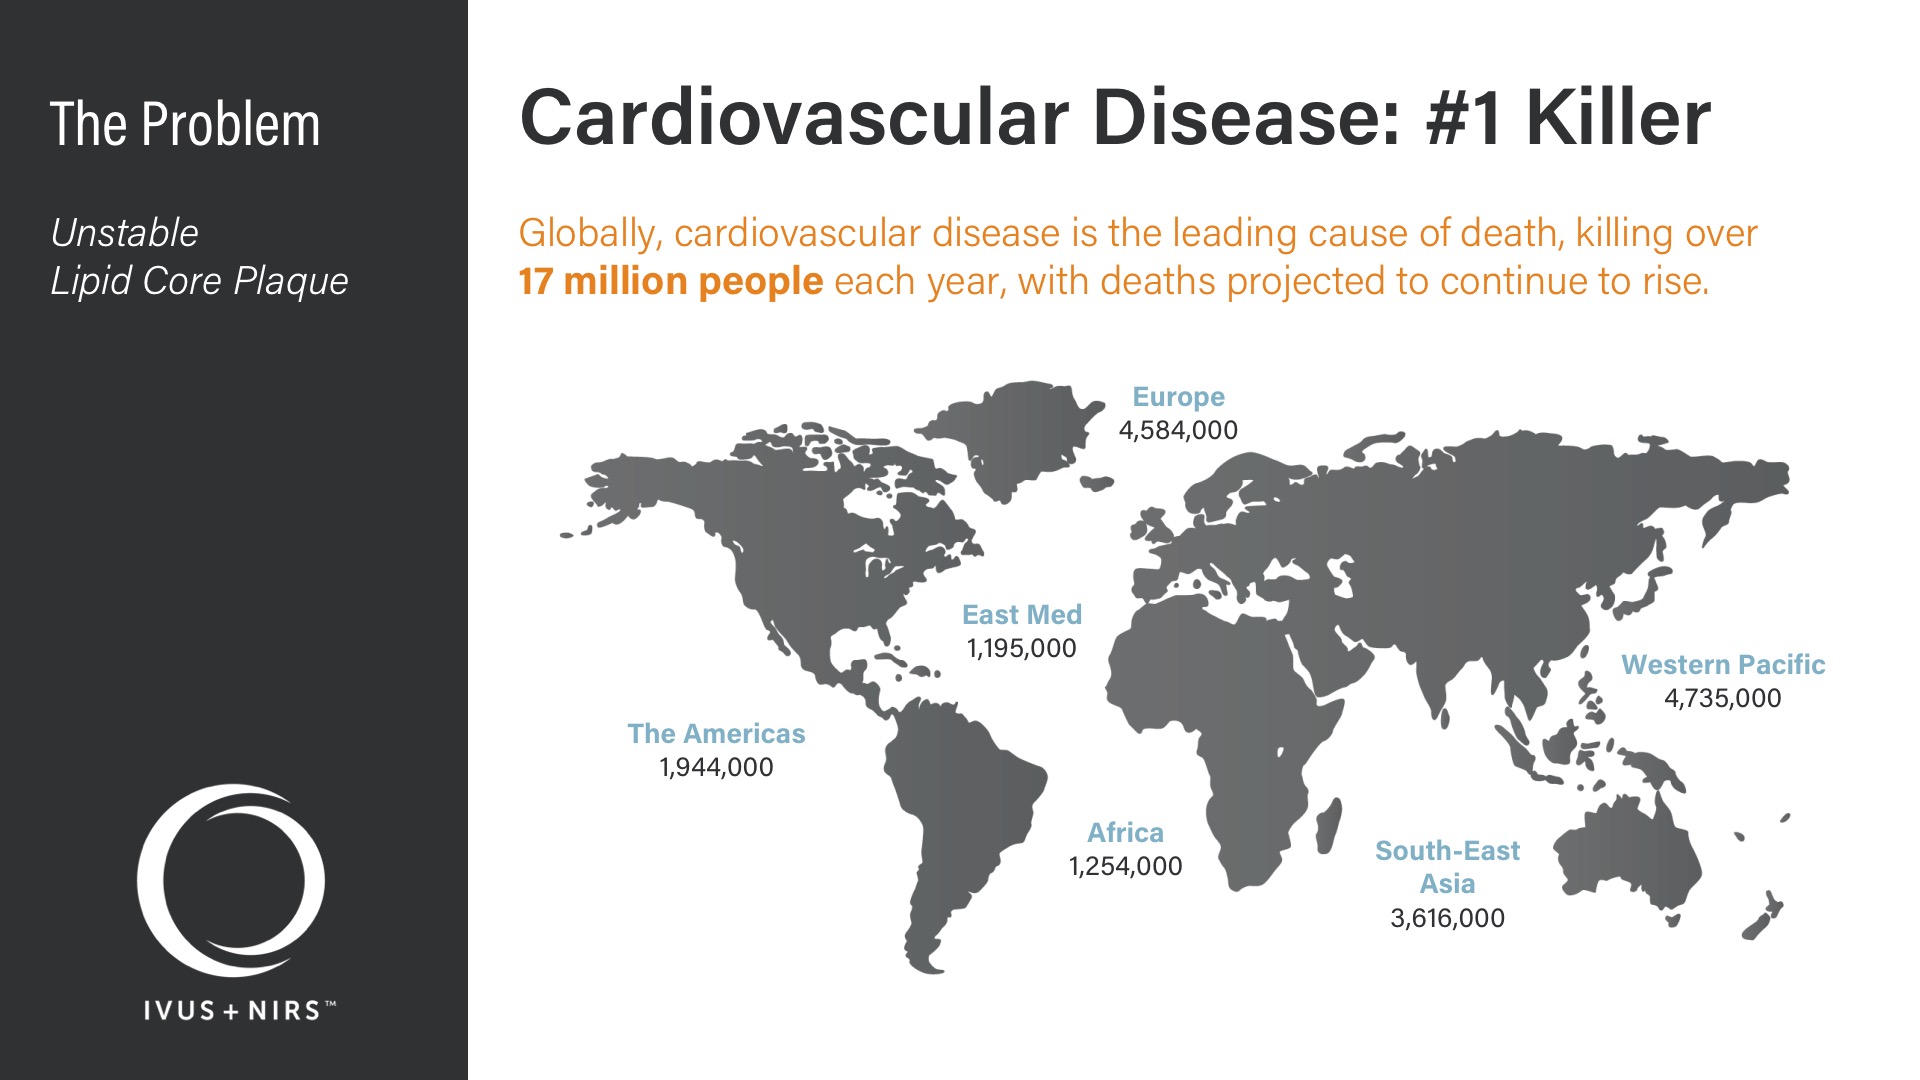 Infraredx Corporate Deck - Problem - Cardiovascular Disease: #1 Global Killer - Kills over 17 million people each year